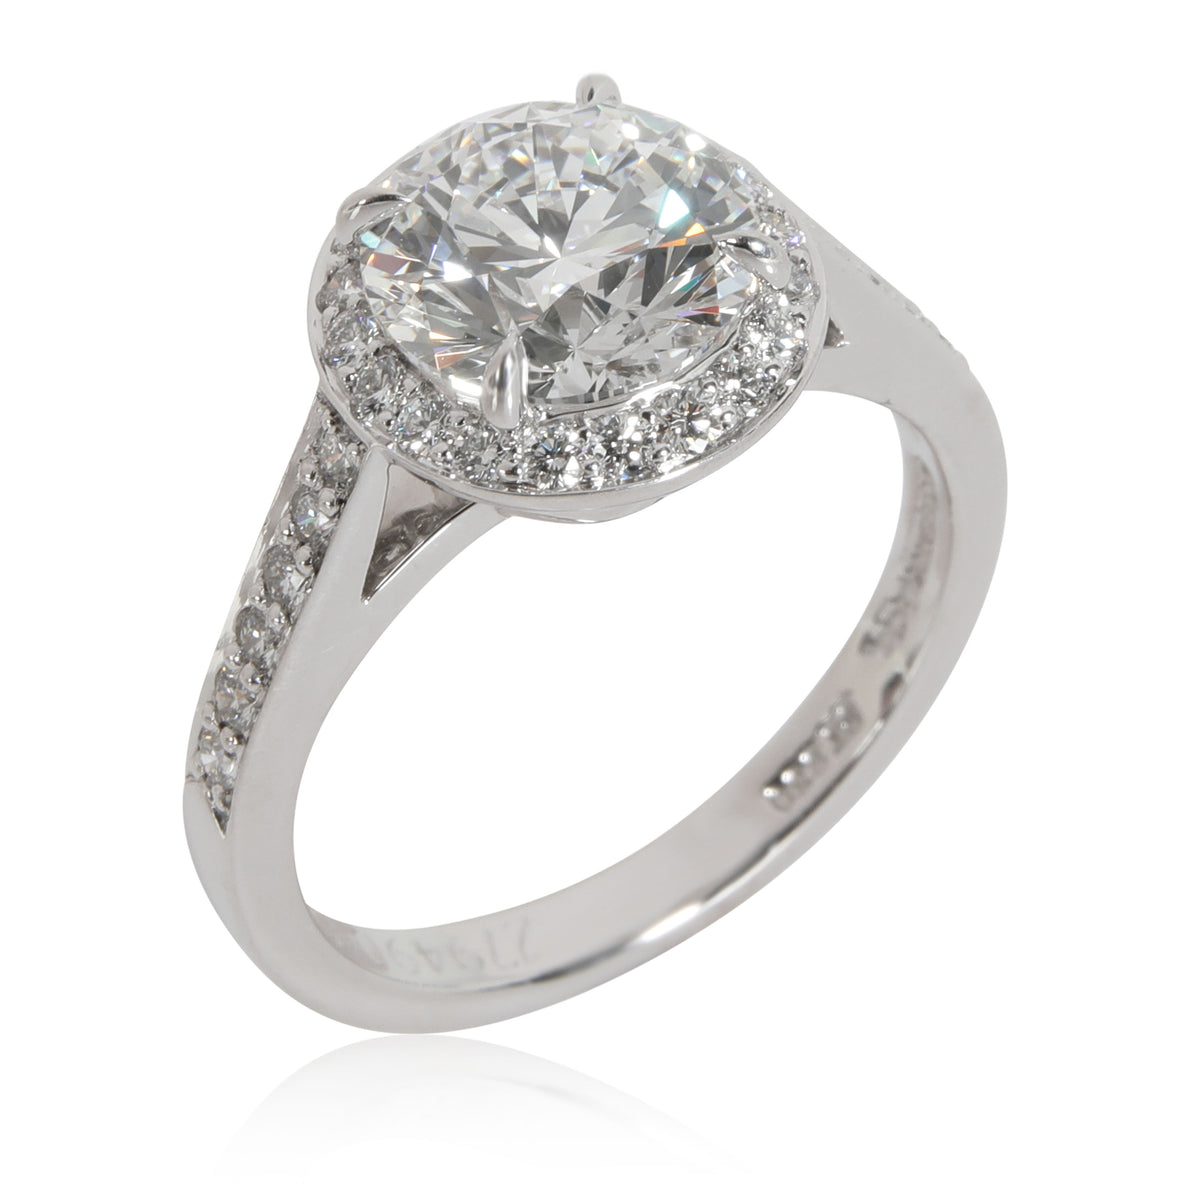 Tiffany & Co. Soleste Diamond Diamond Engagement Ring in Platinum D IF 2.21 CTW